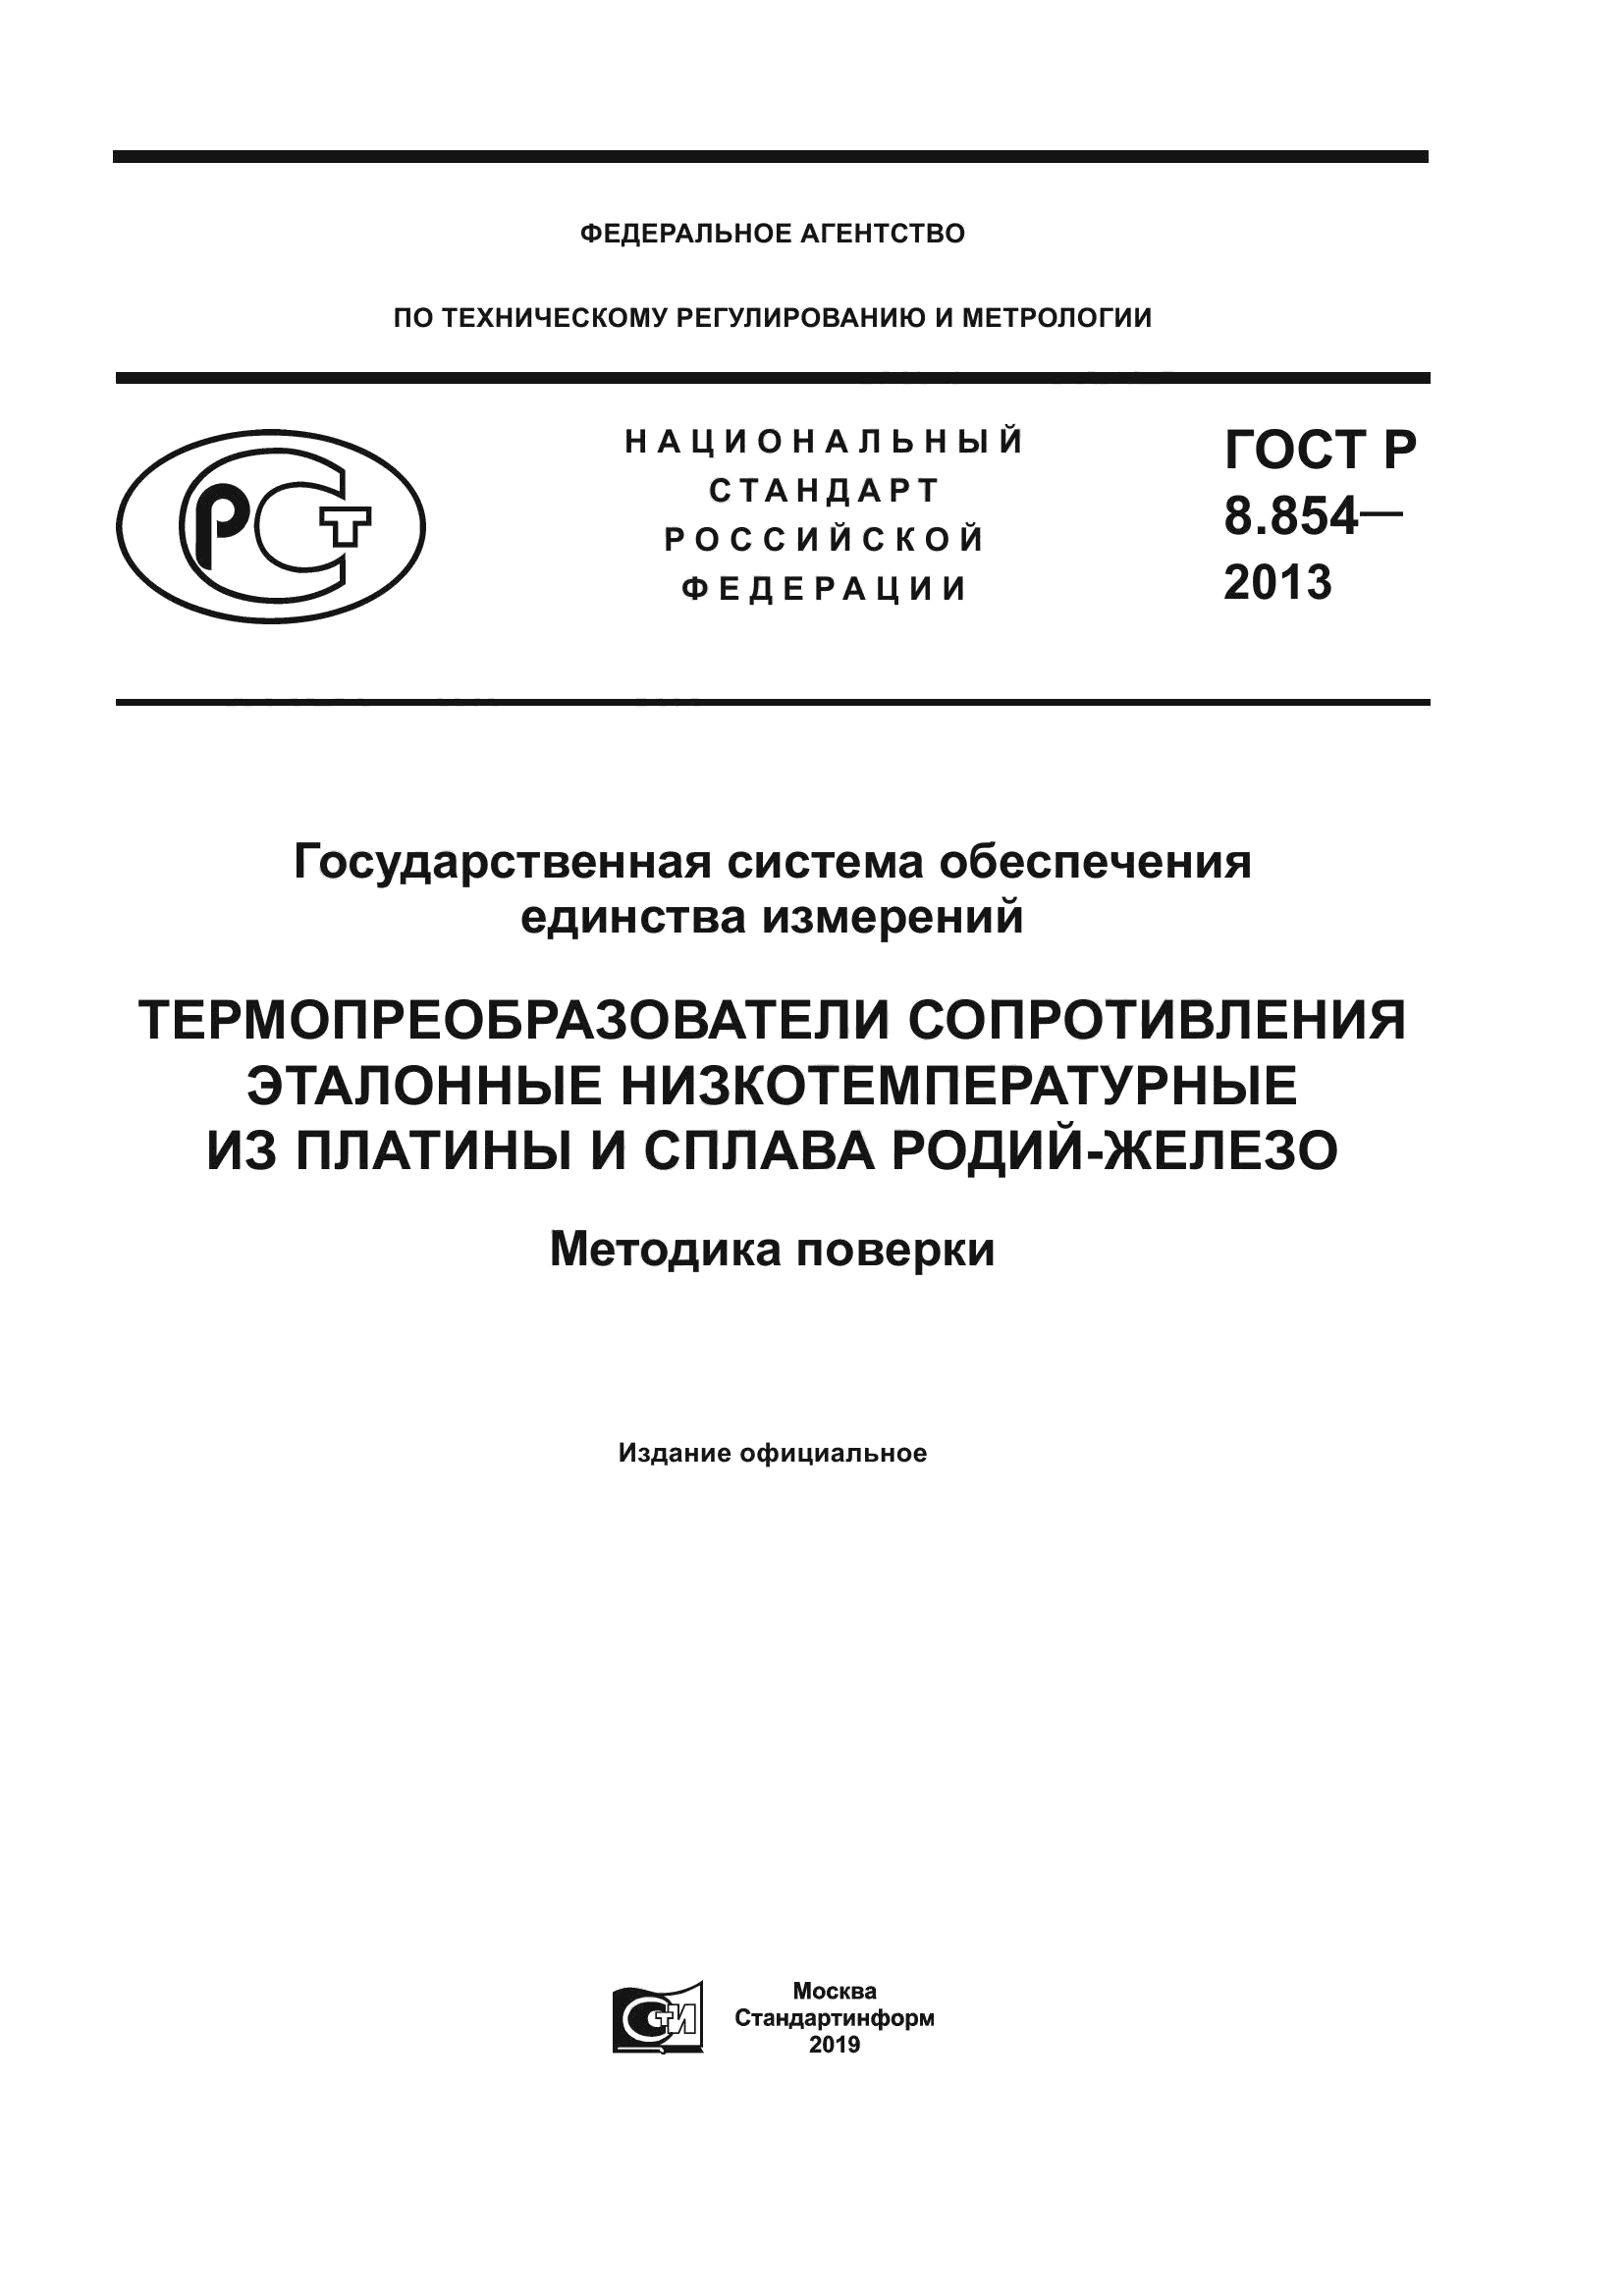 ГОСТ Р 8.854-2013